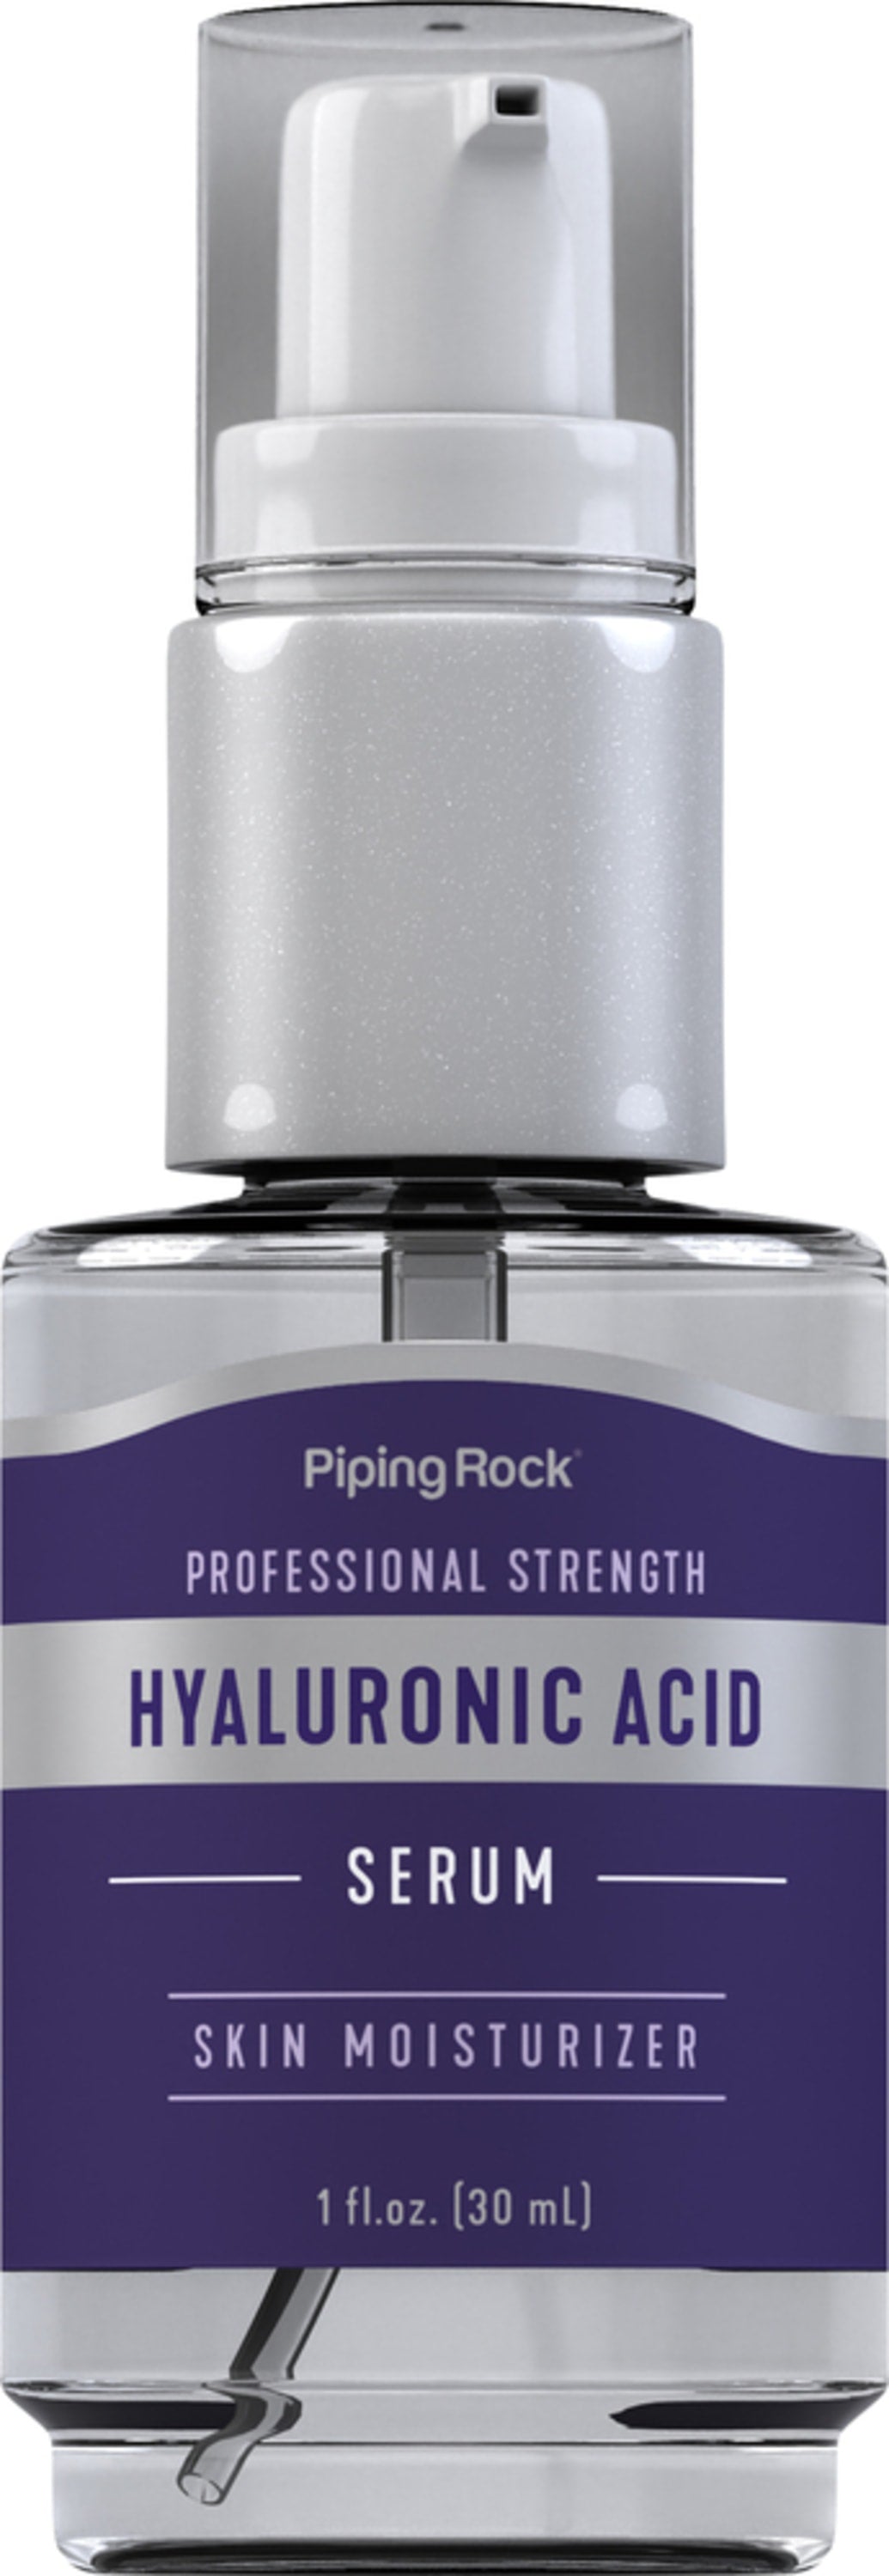 Hyaluronic Acid Serum, 1 fl oz (30 mL) Pump Bottle